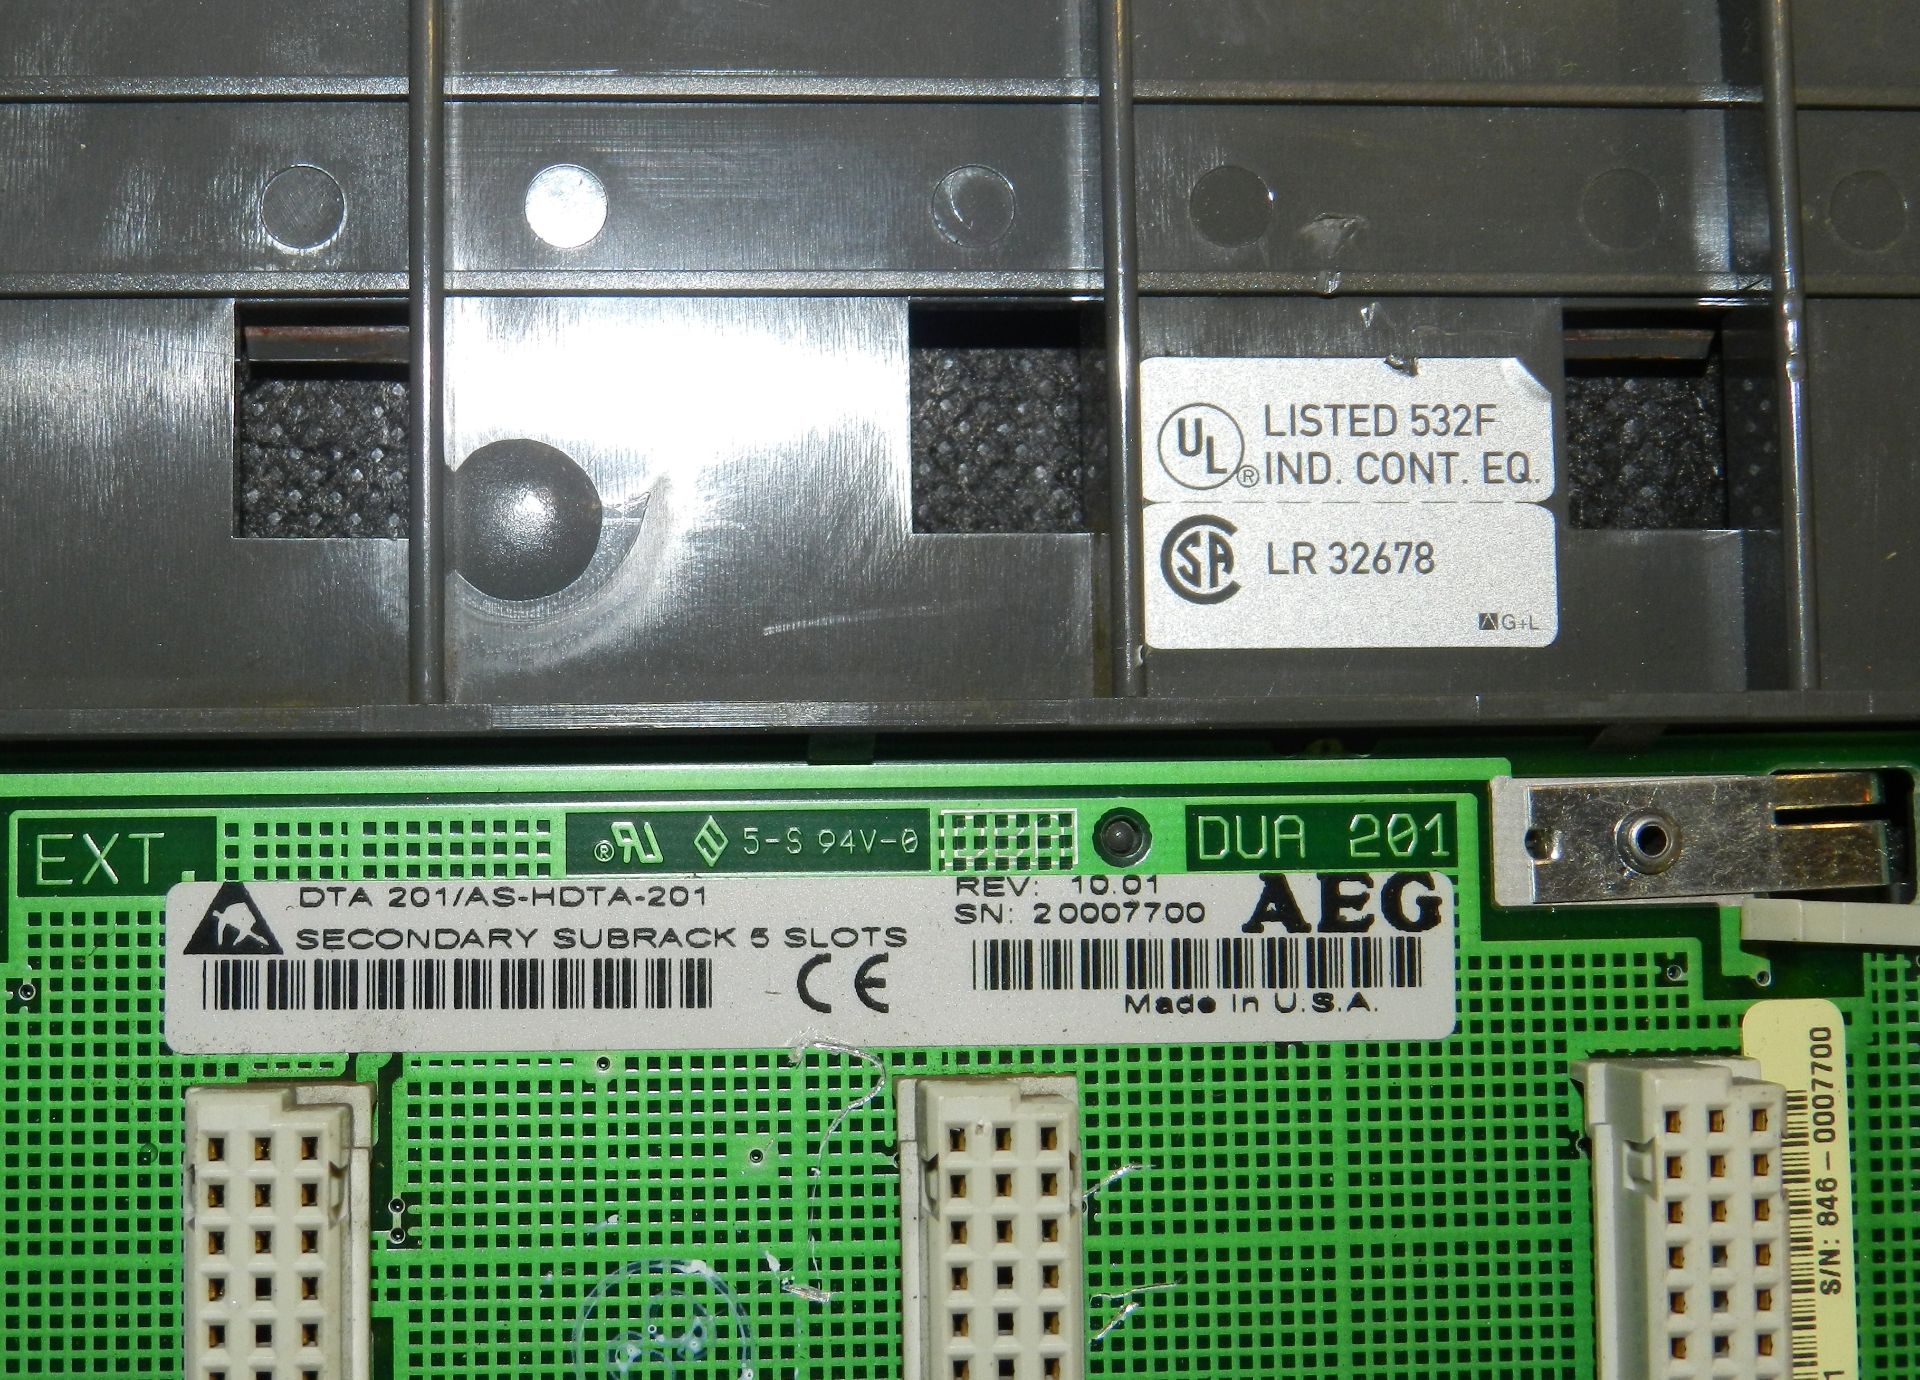 AEG Modicon PC-A984-145 CPU I/O PLC Assembly Rack - Image 6 of 11